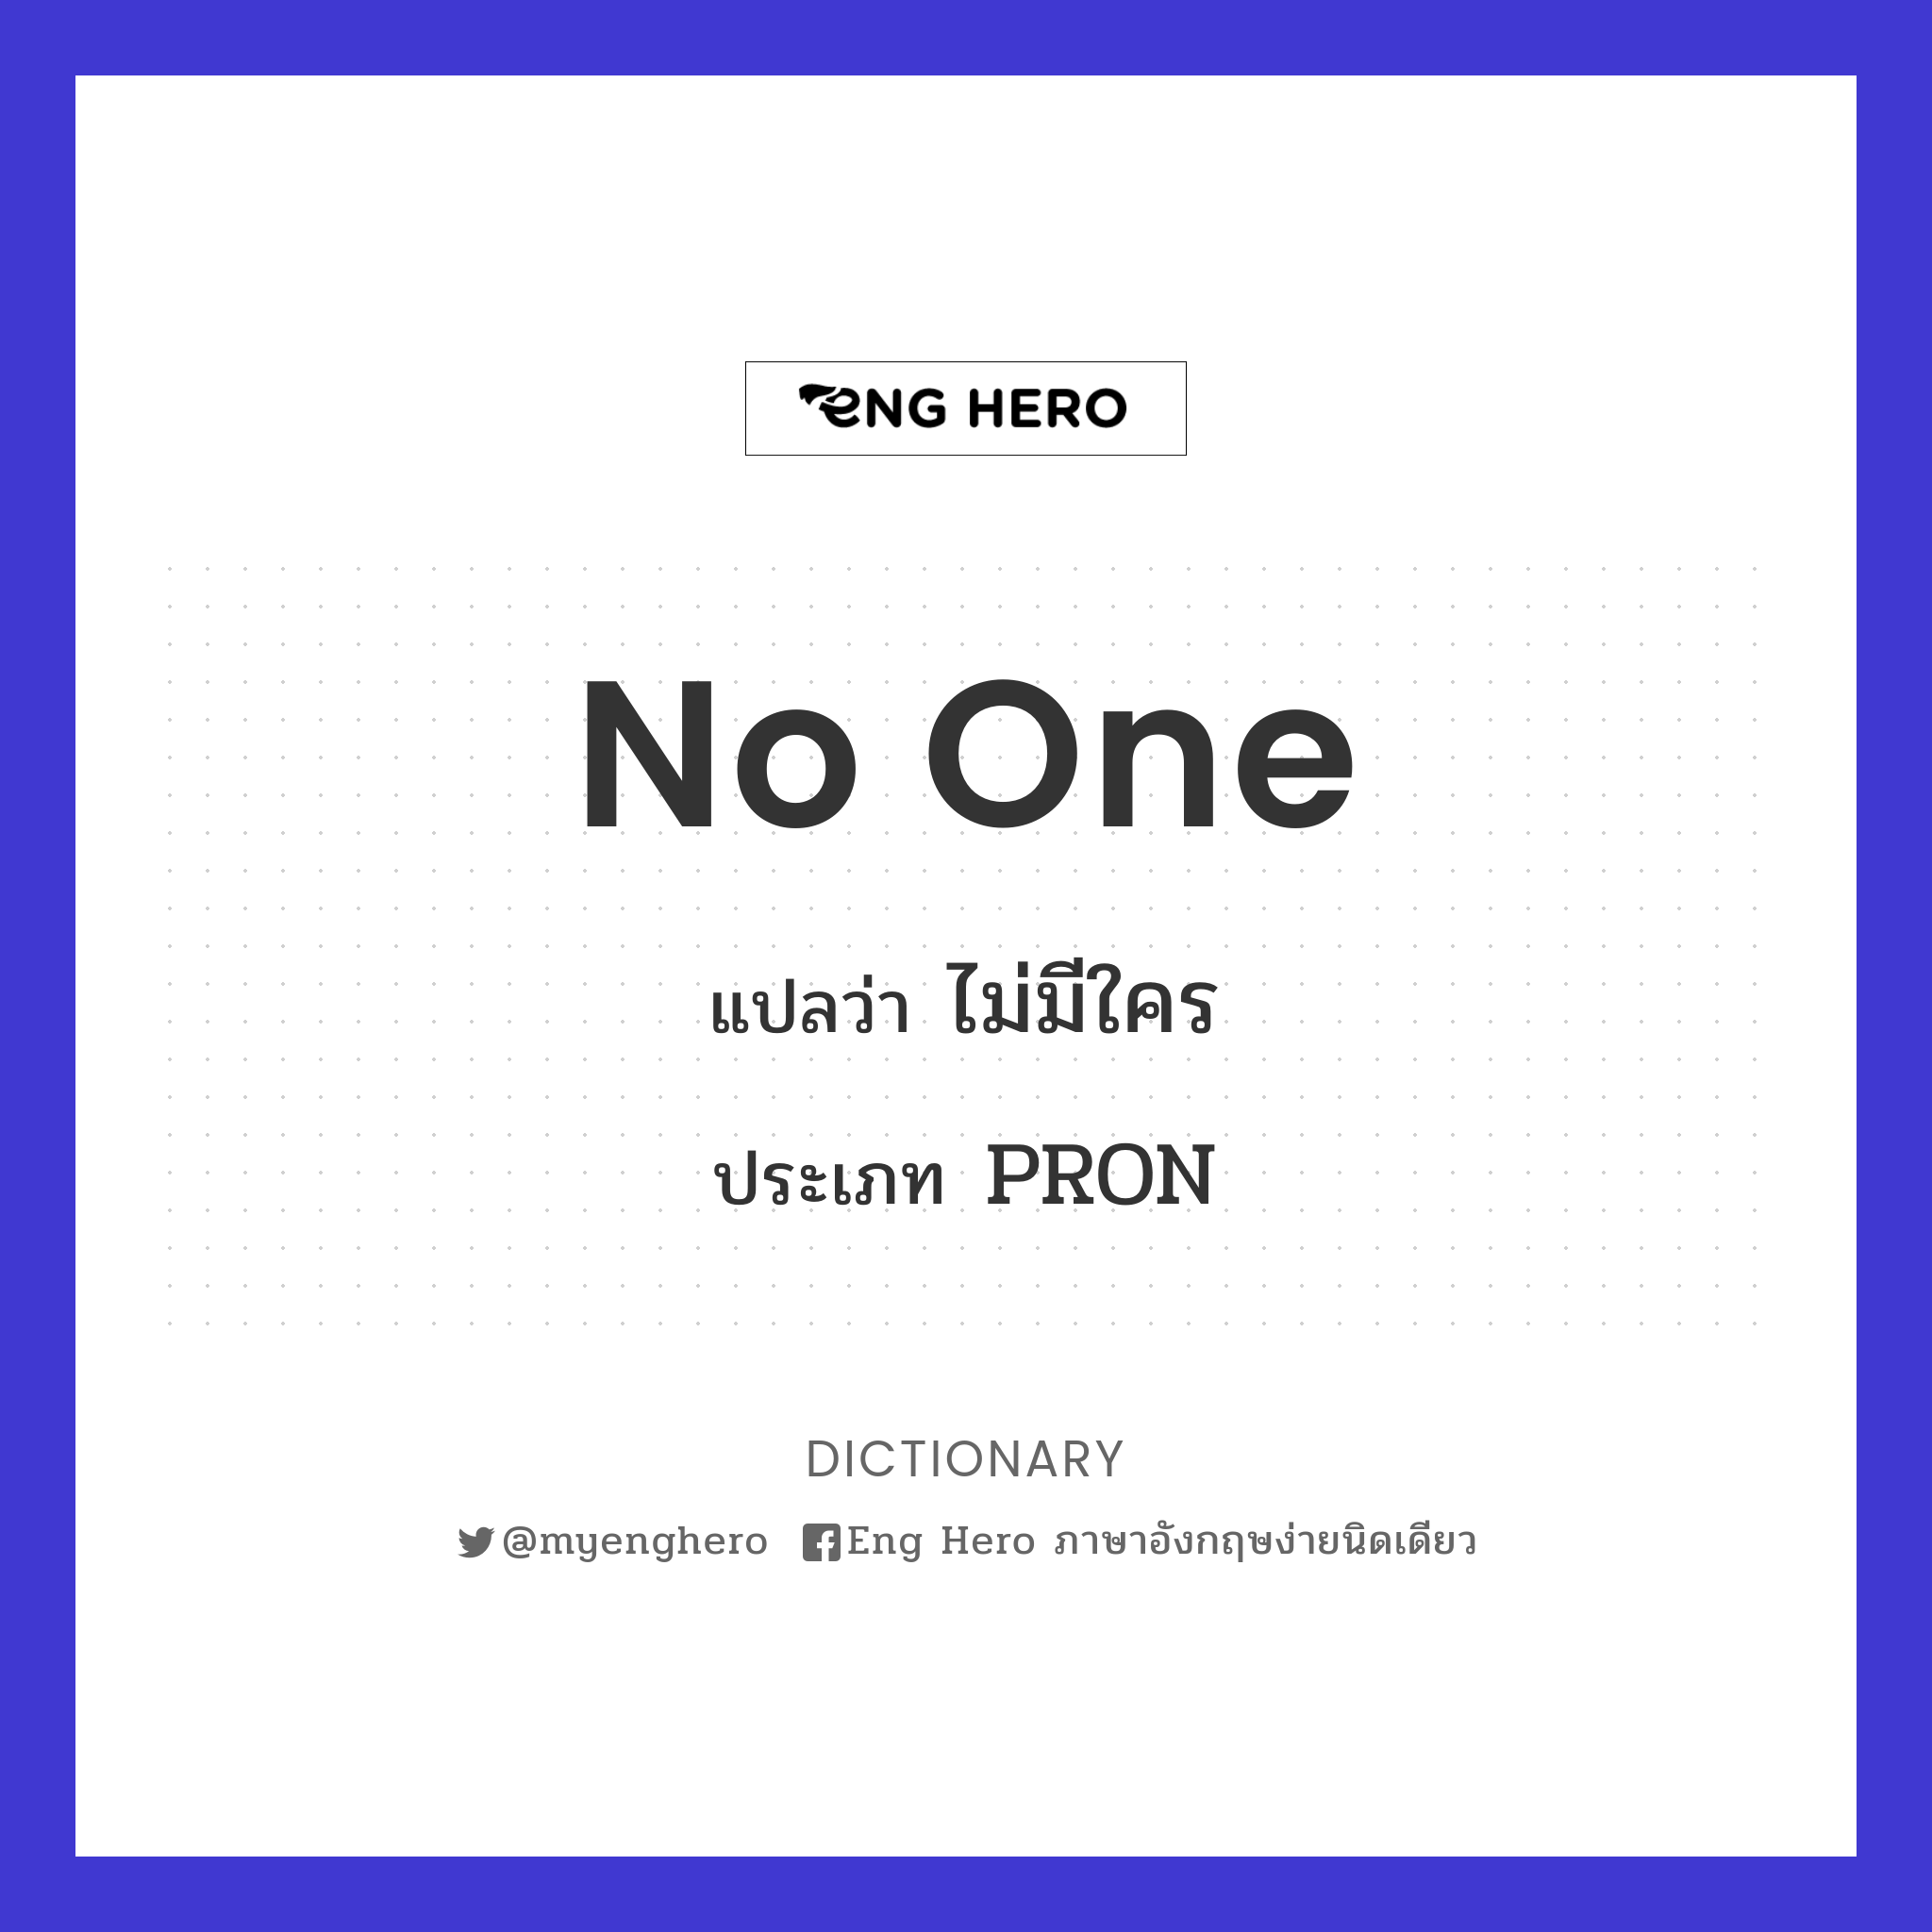 no one